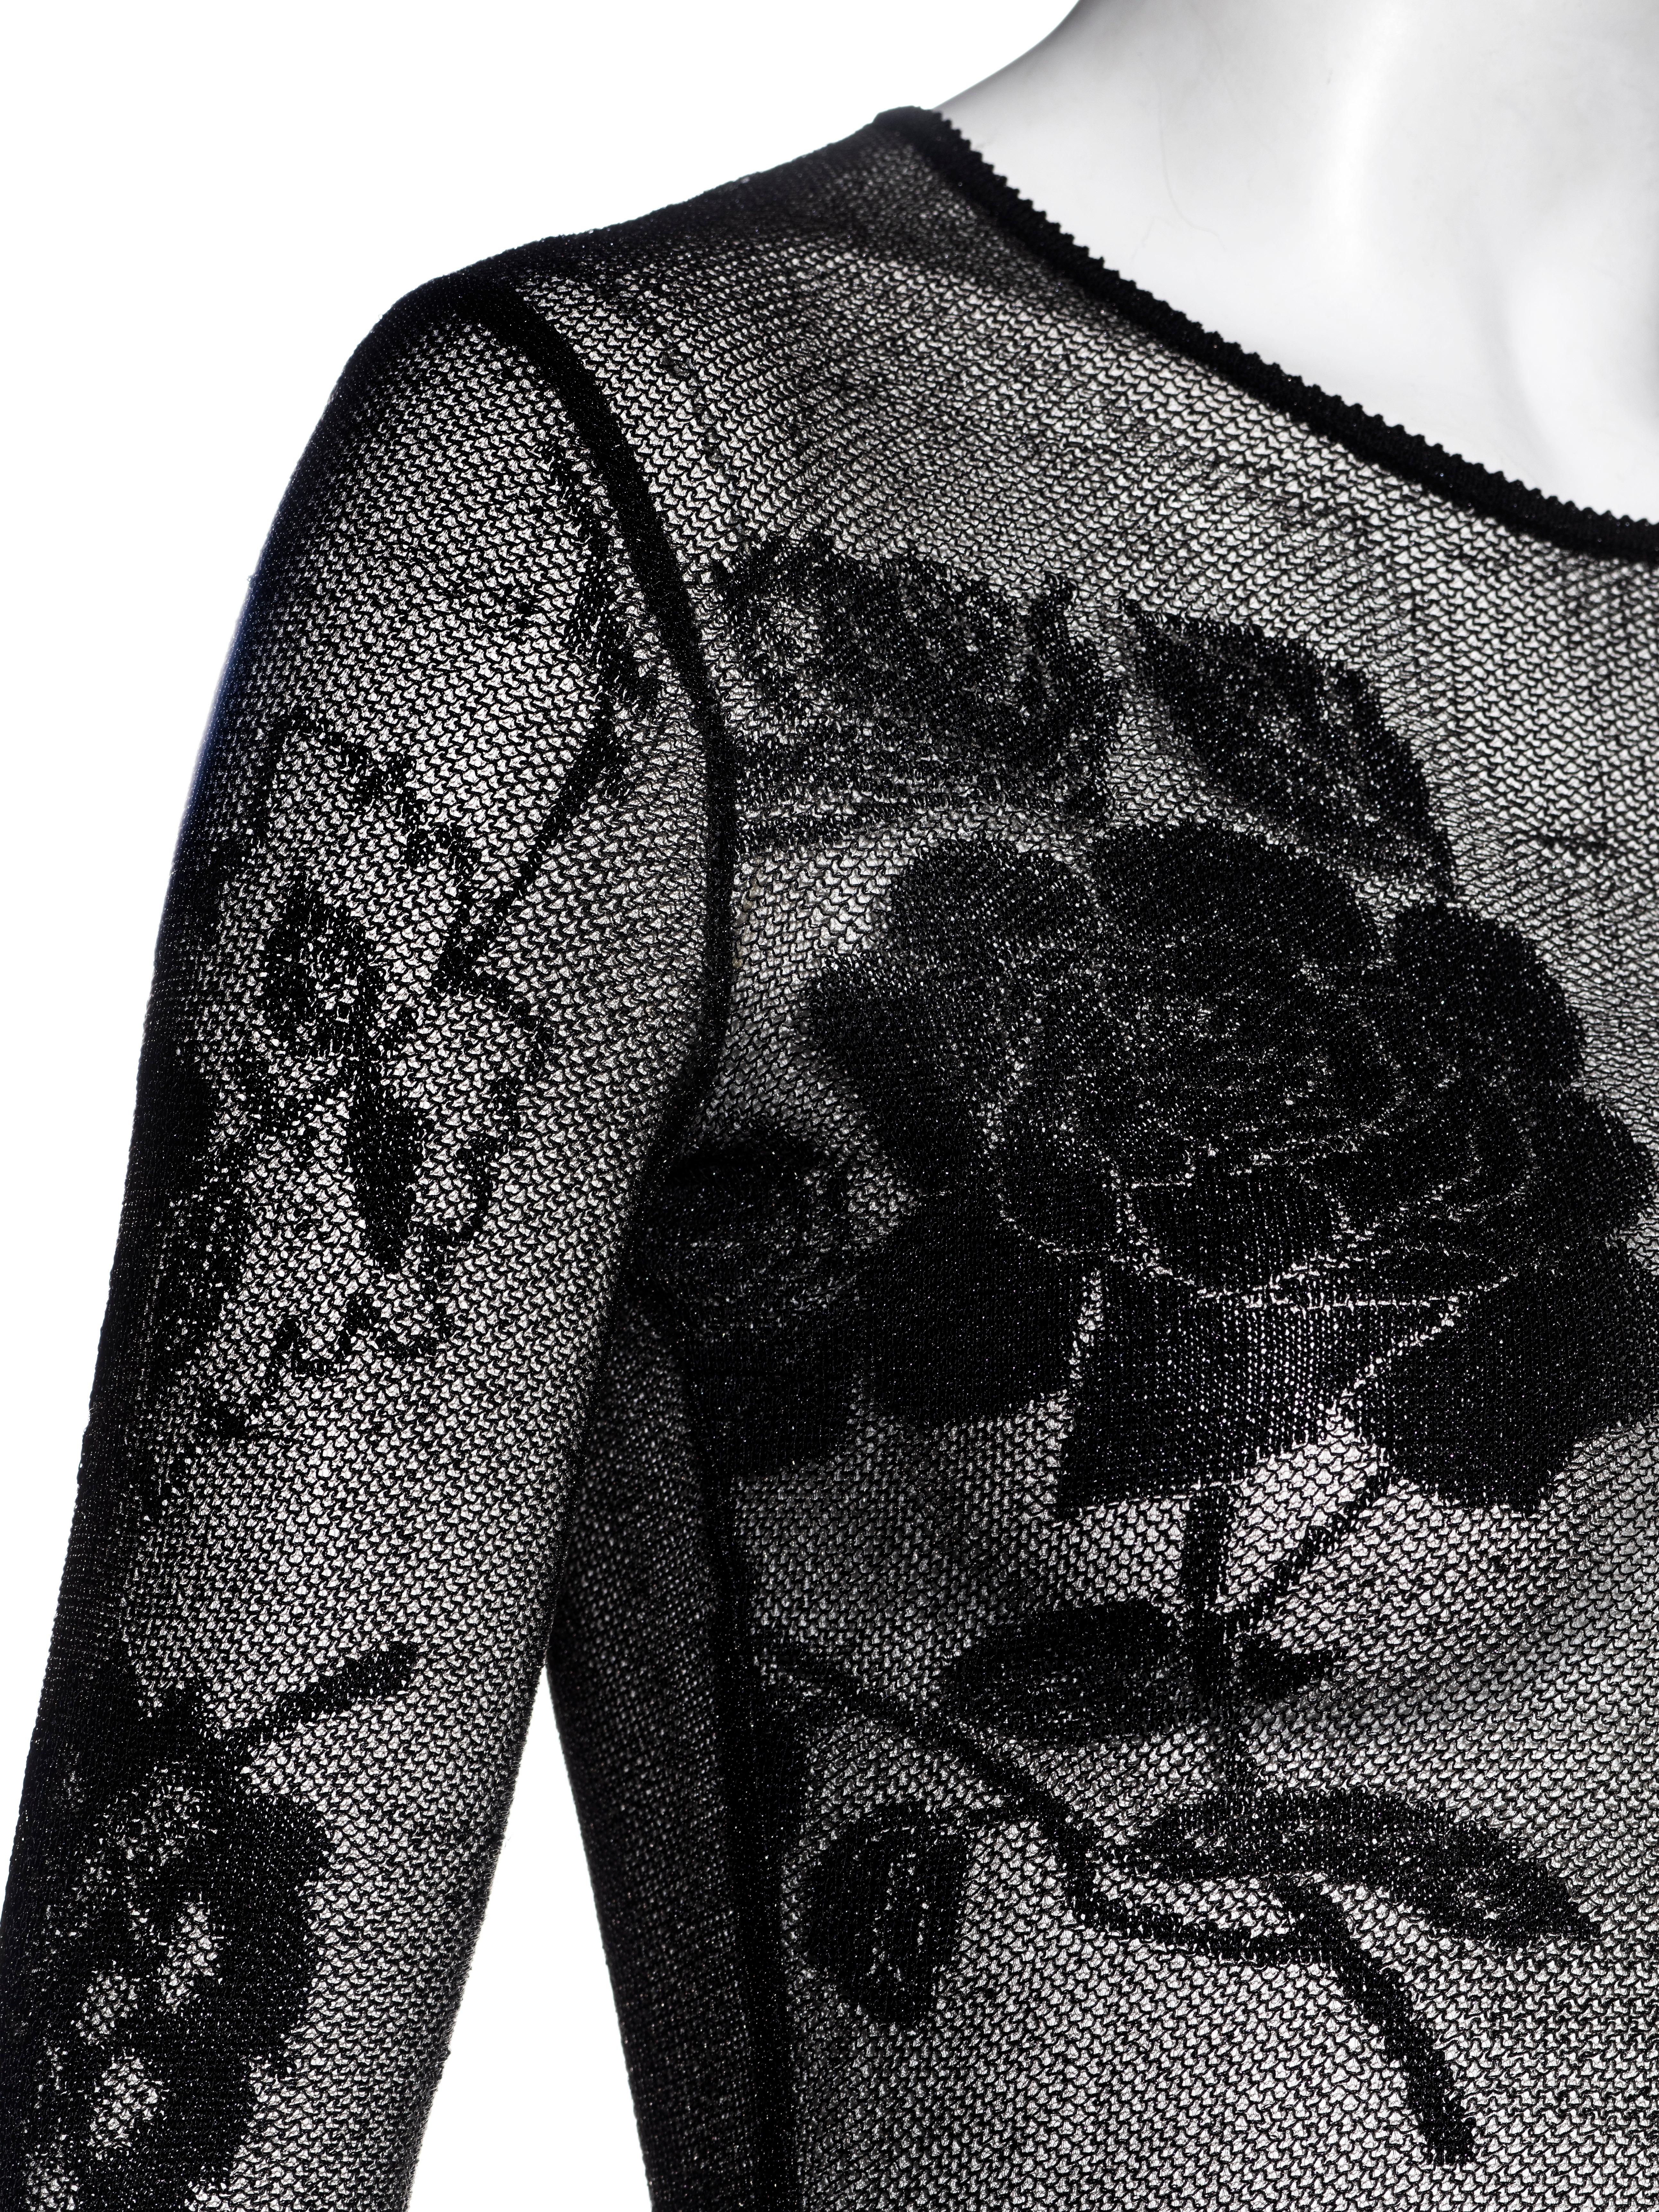 John Galliano black sheer knit tattoo top, fw 1997 2